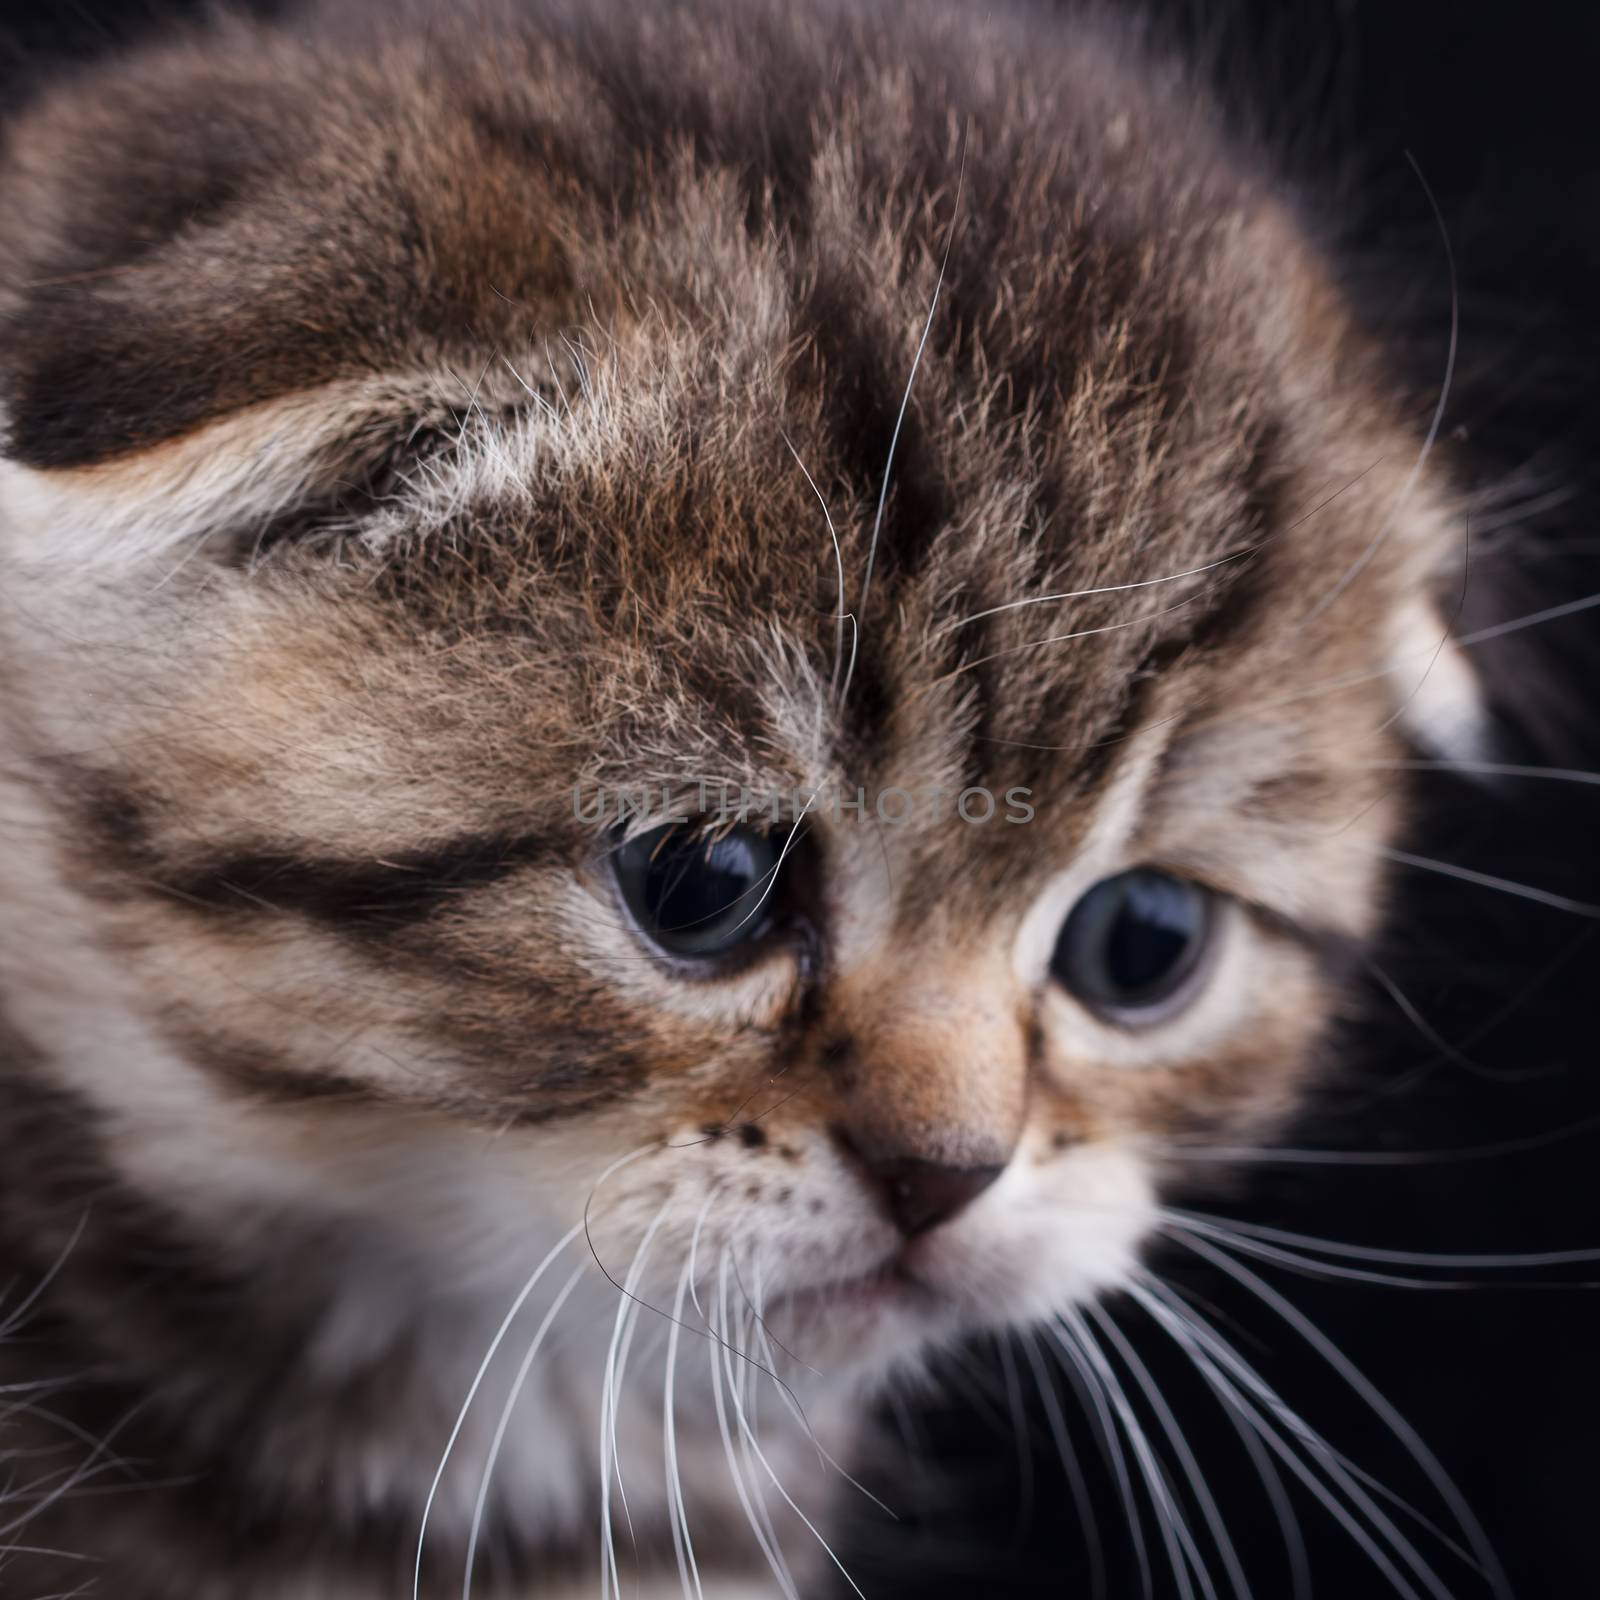 Lop-eared kitten on background. by baronvsp